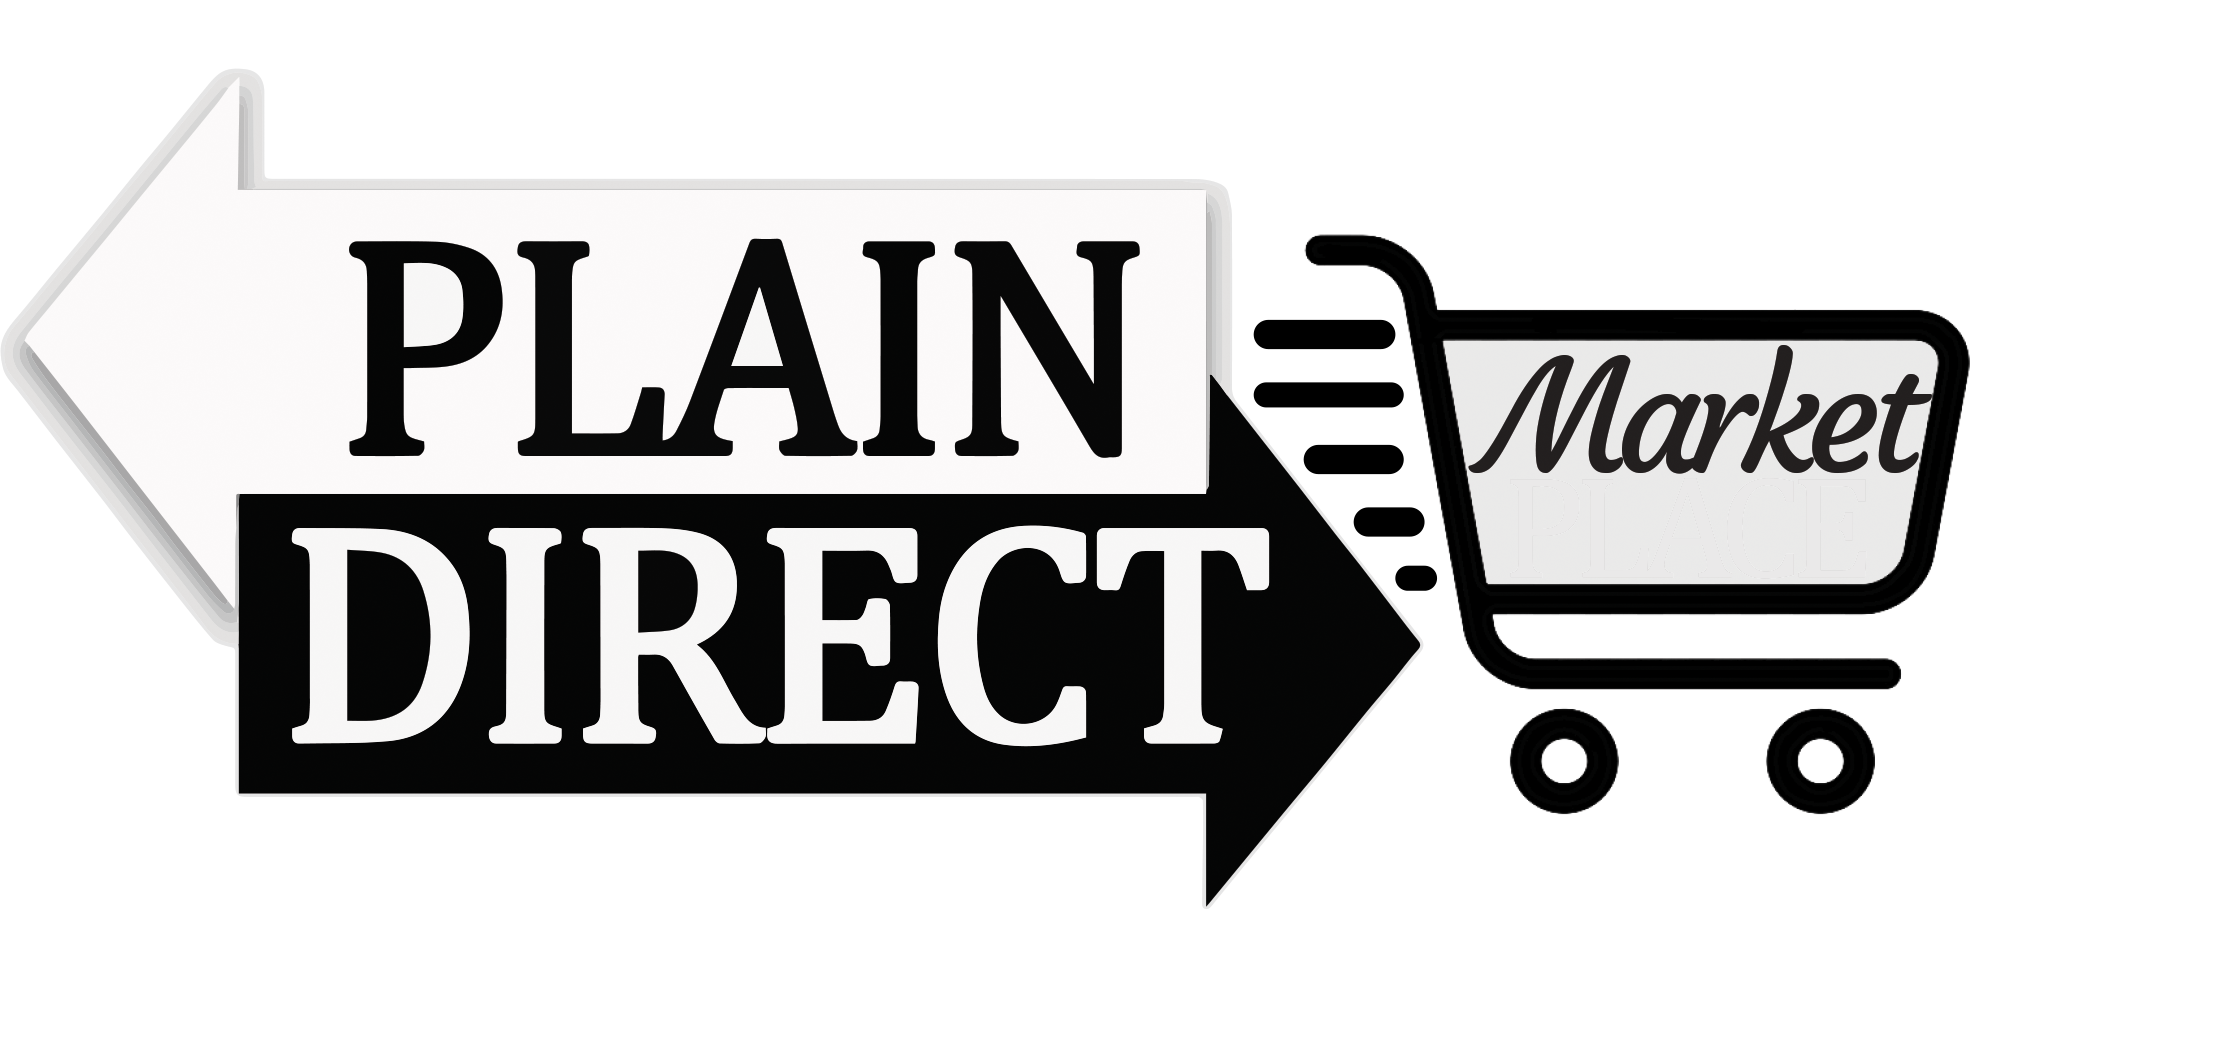 PlainDirectMarket.com